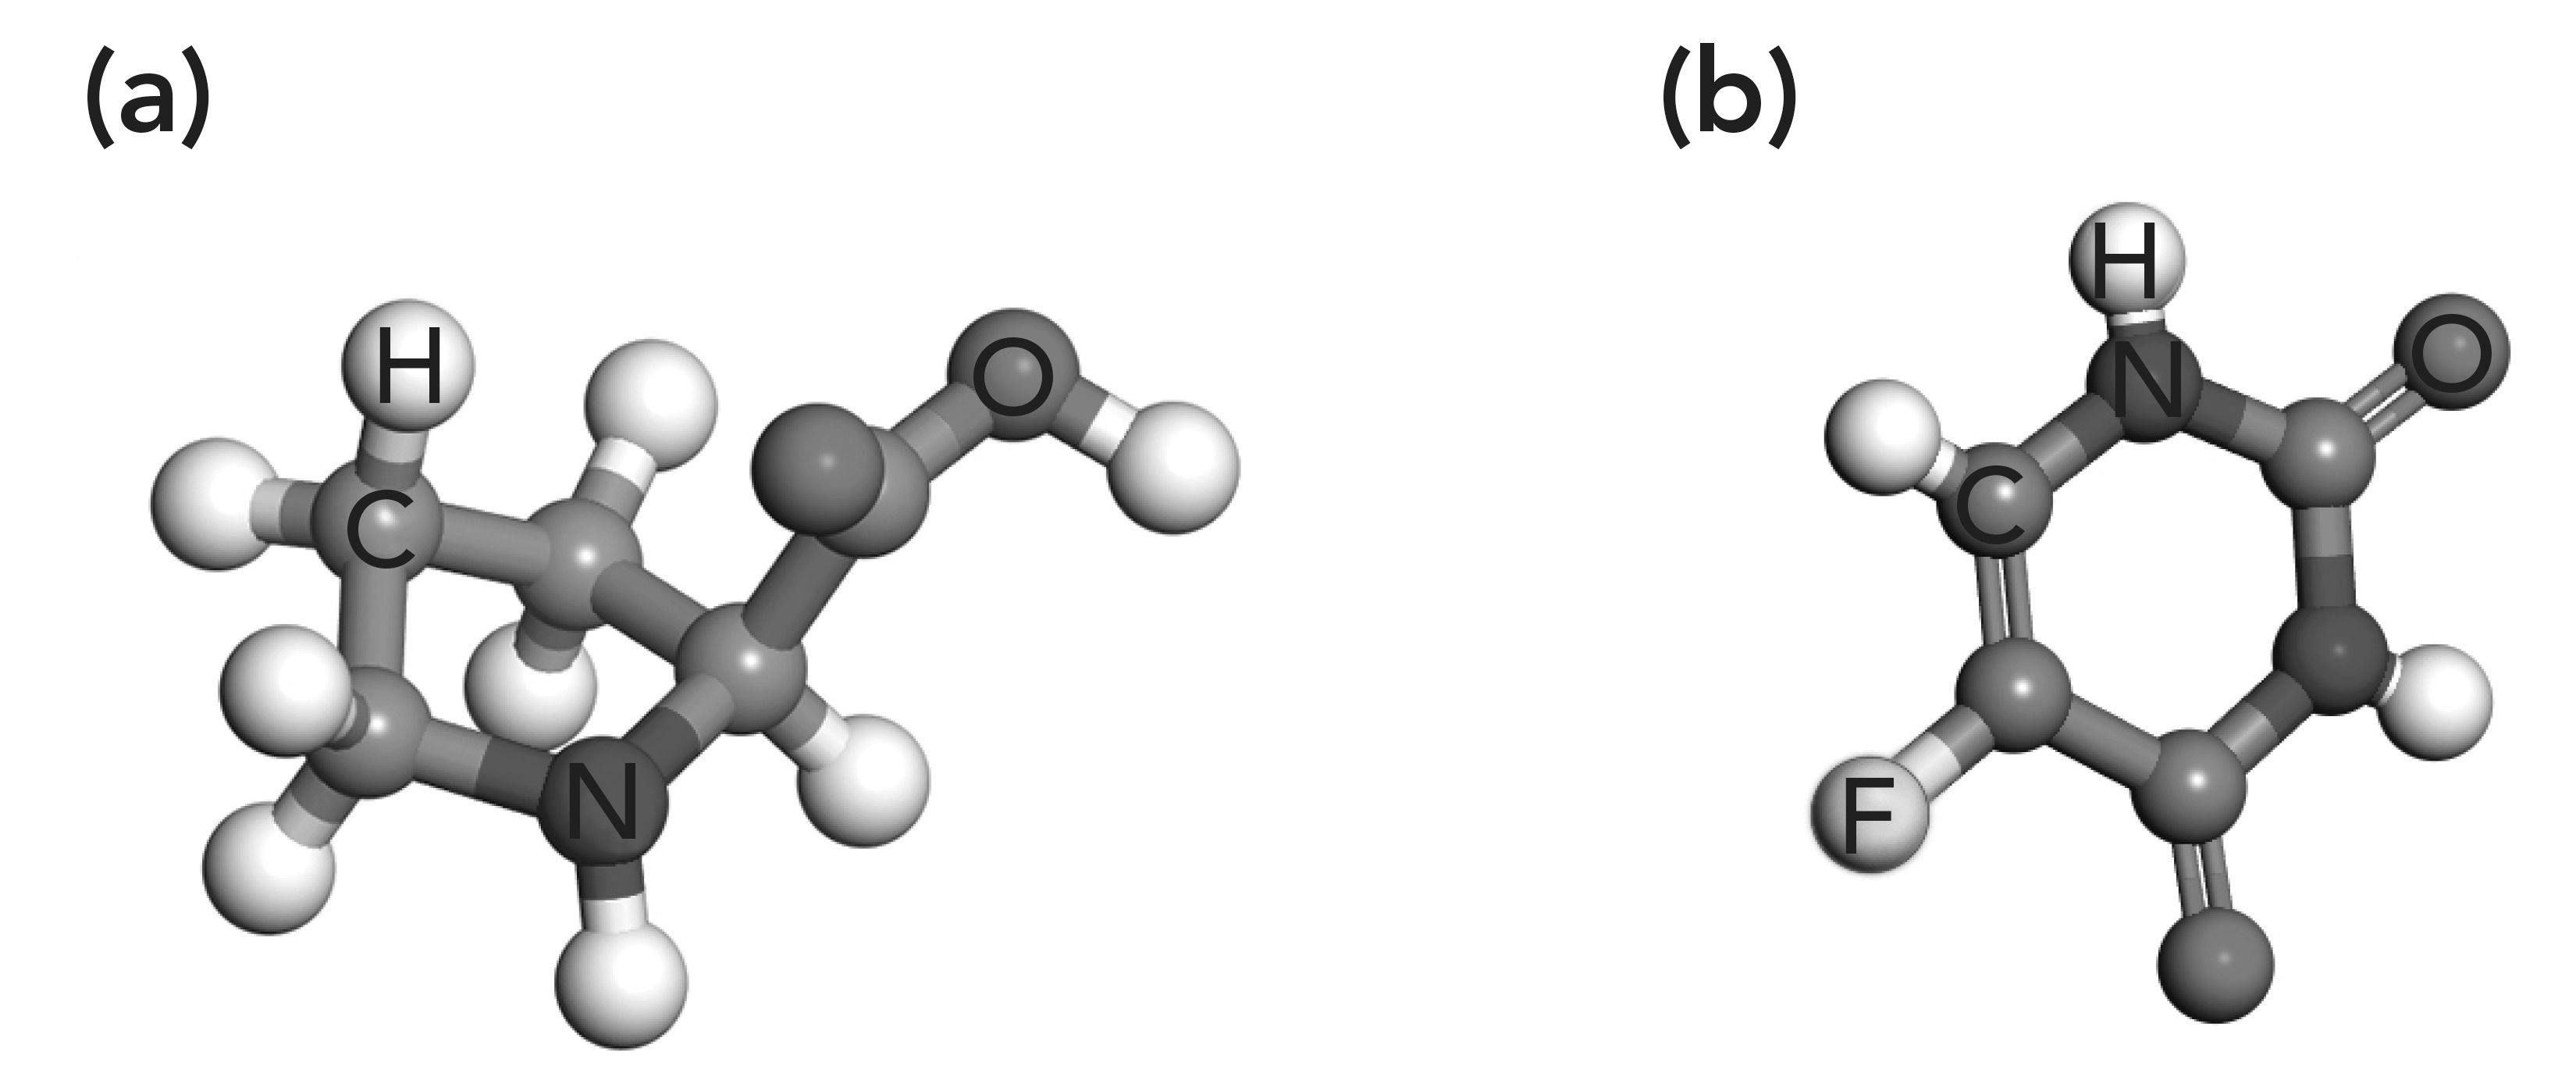 FIGURE 1: Molecular structure of (a) proline and (b) 5-FU.